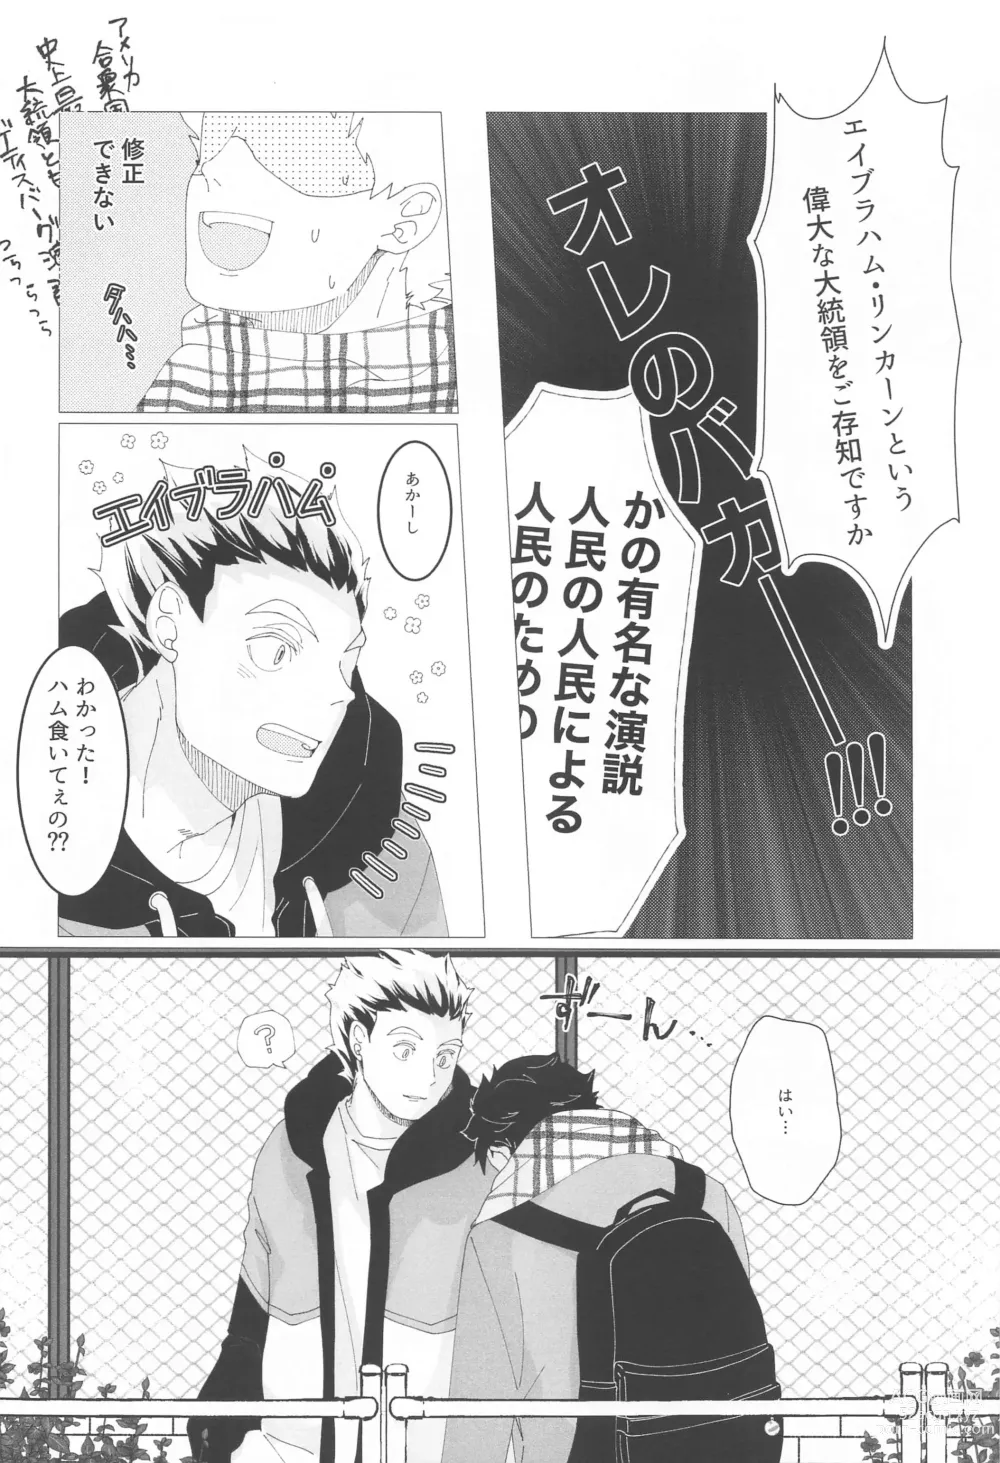 Page 13 of doujinshi Magarinari ni mo Koibito nanode